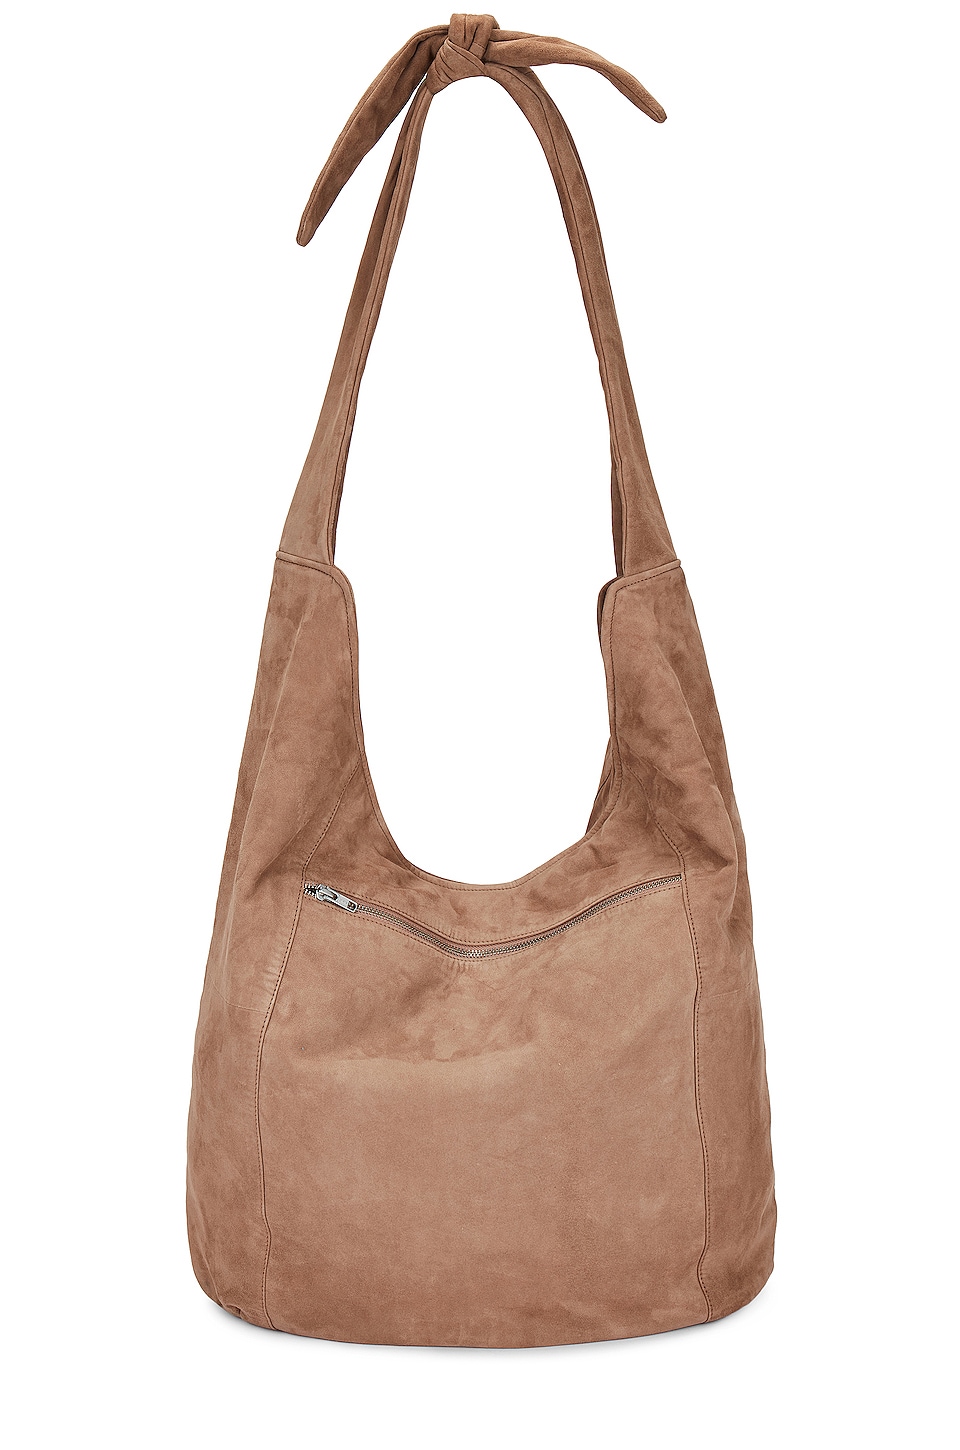 Stoney Clover Lane Women's Curved Crossbody Bag, Honey, Tan, One Size:  Handbags